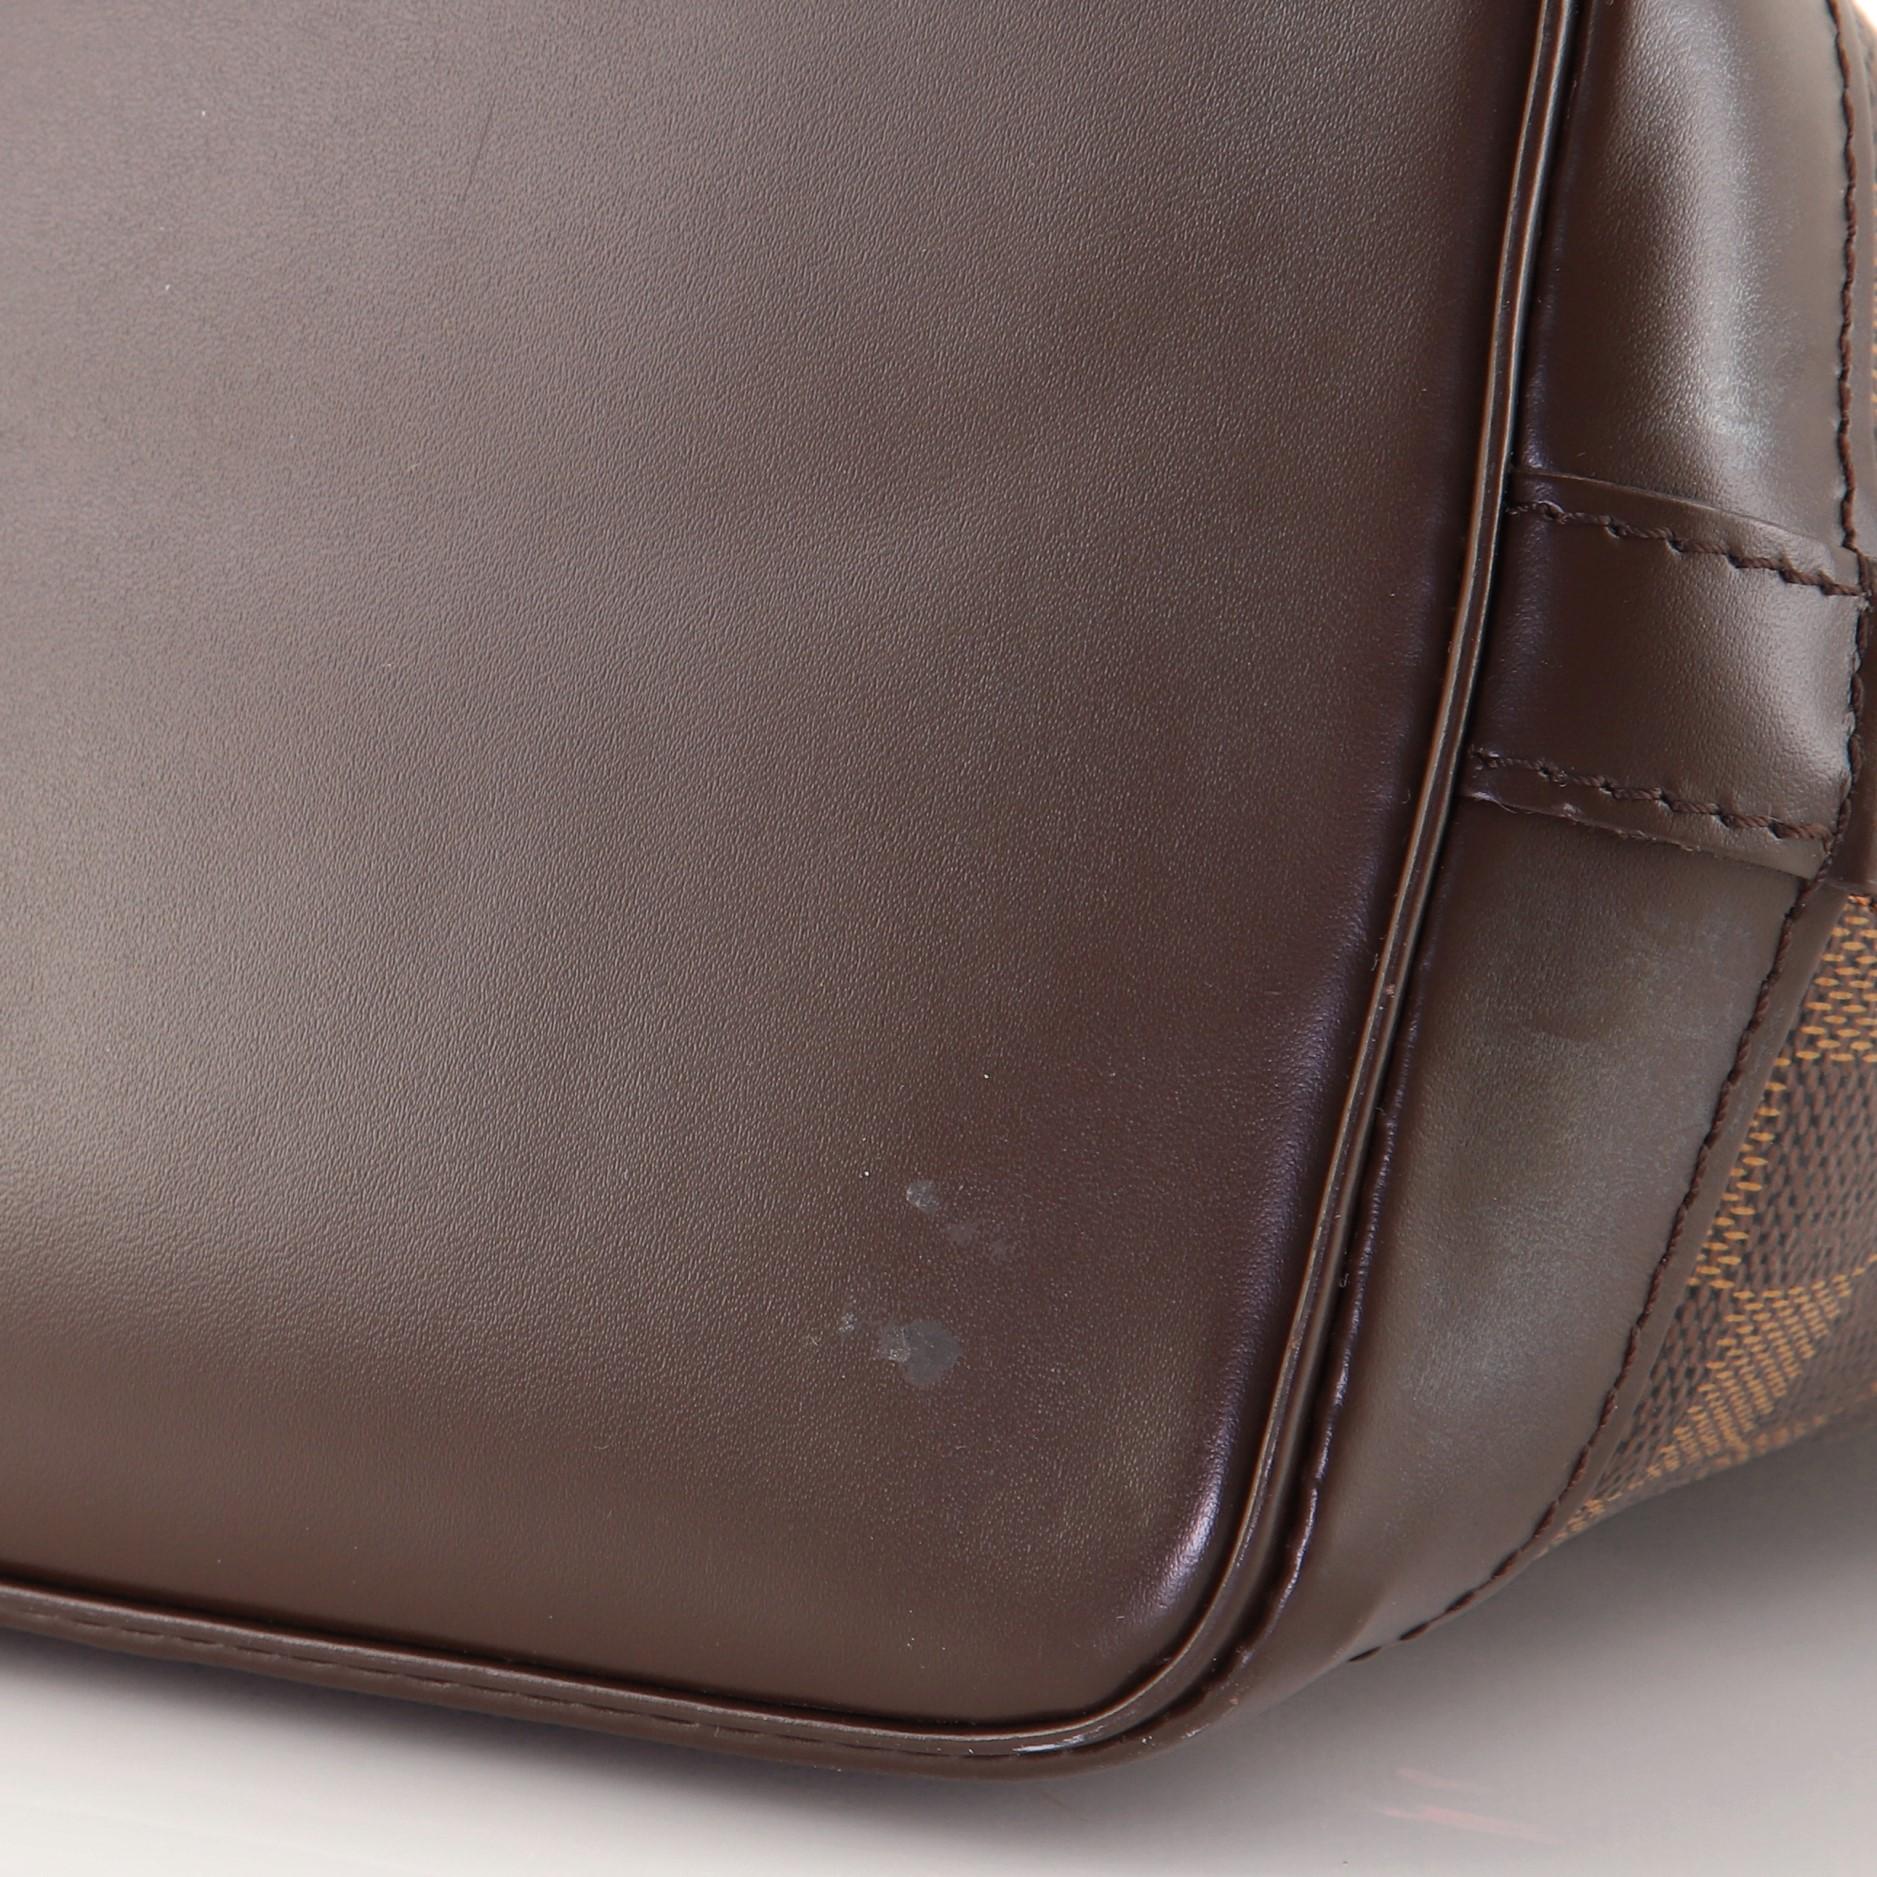 Brown Louis Vuitton Vintage Alma Handbag Damier PM